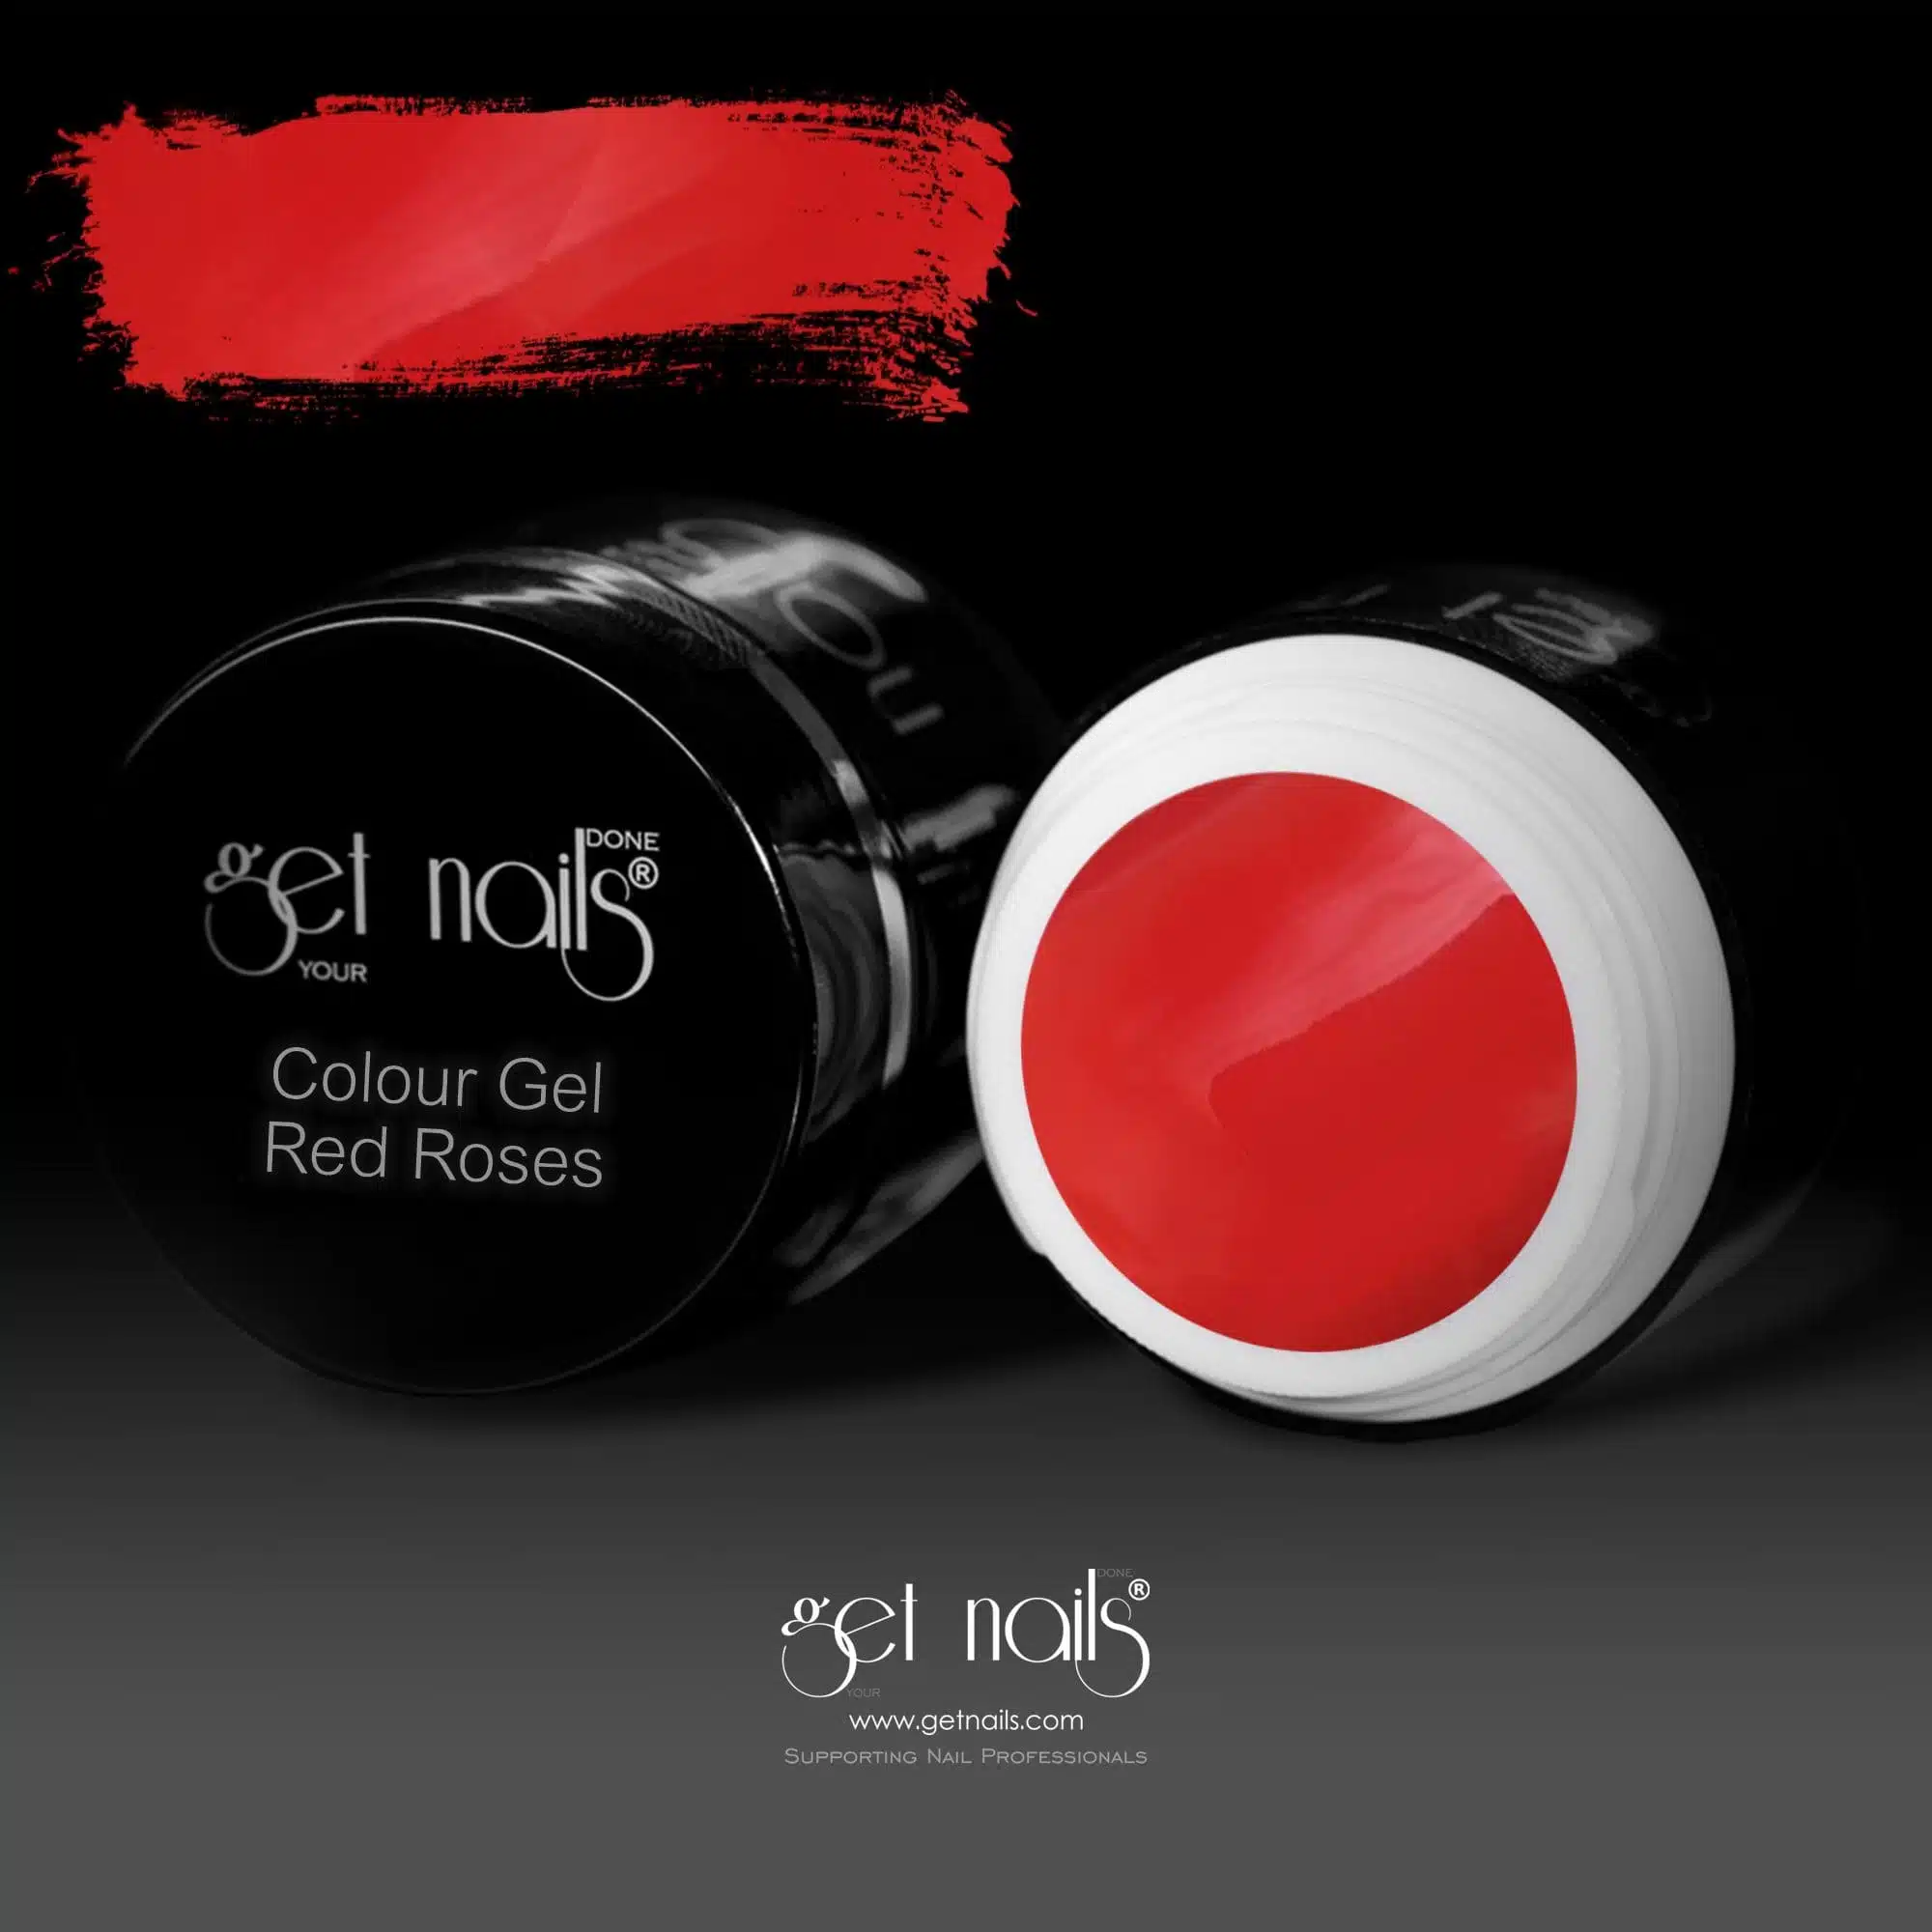 Get Nails Austria - Colour Gel Red Roses 5g